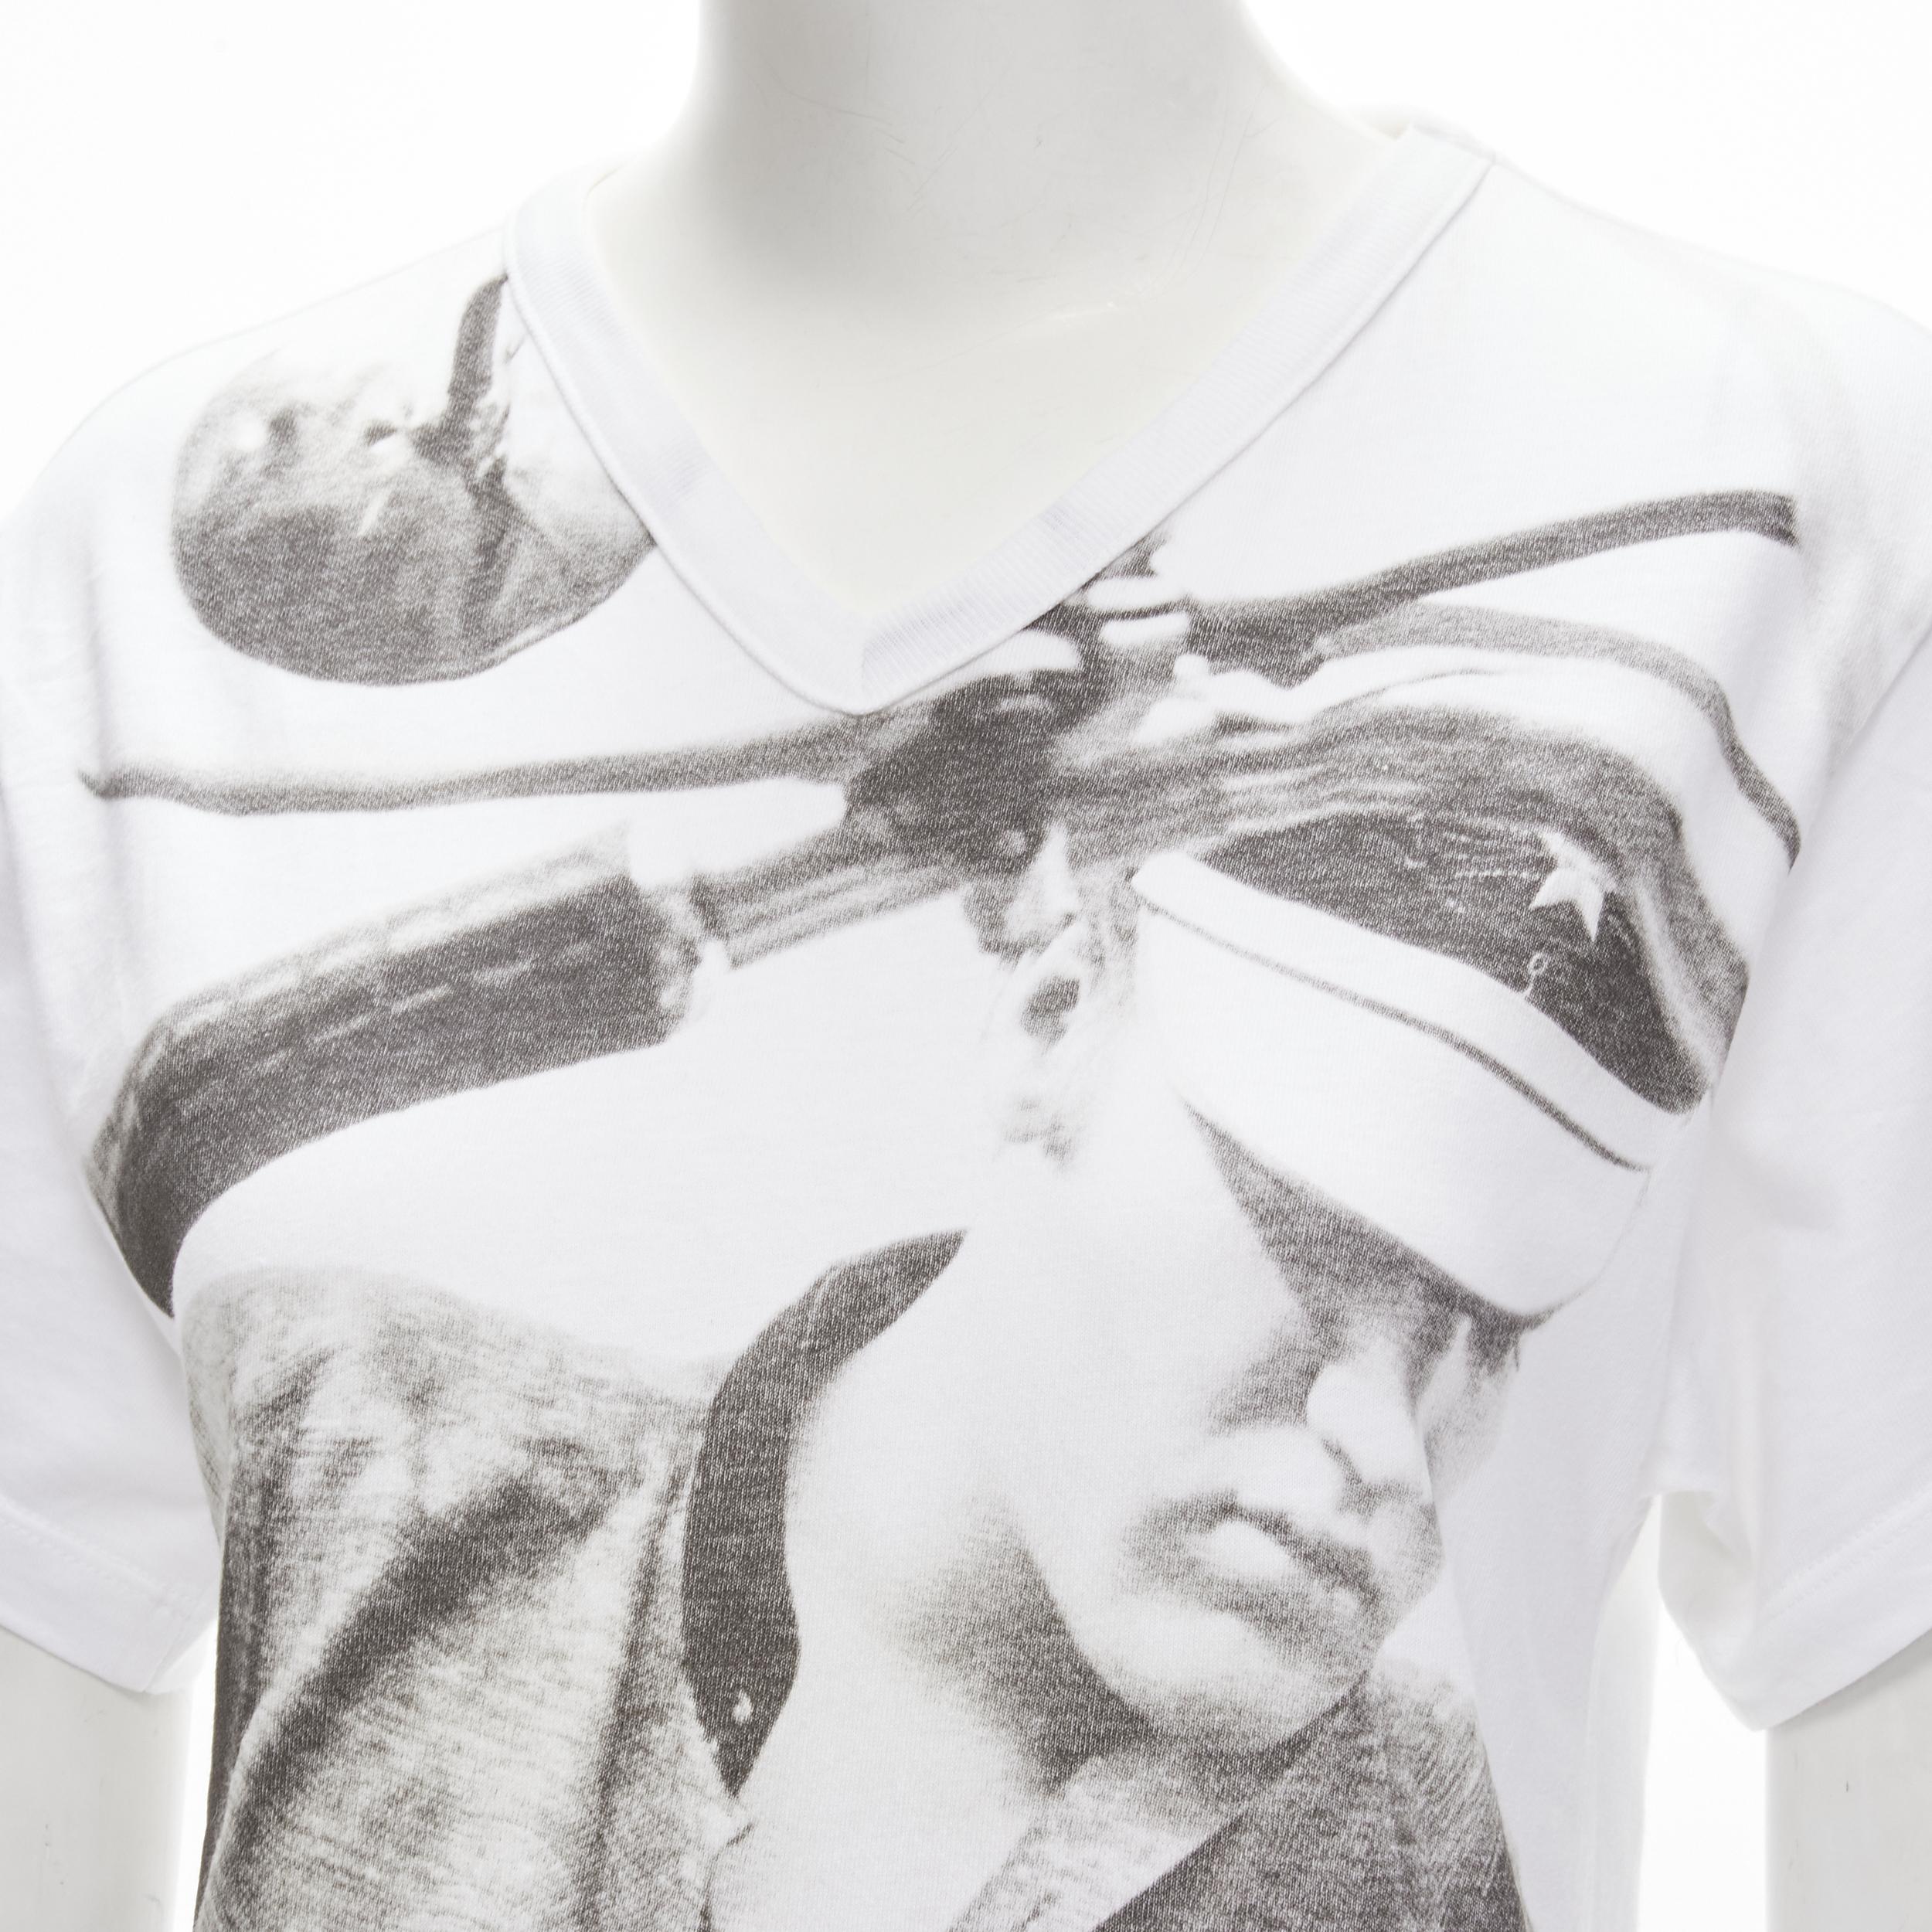 D&G DOLCE GABBANA Elvis Presley Y2K photo print white tshirt S 3